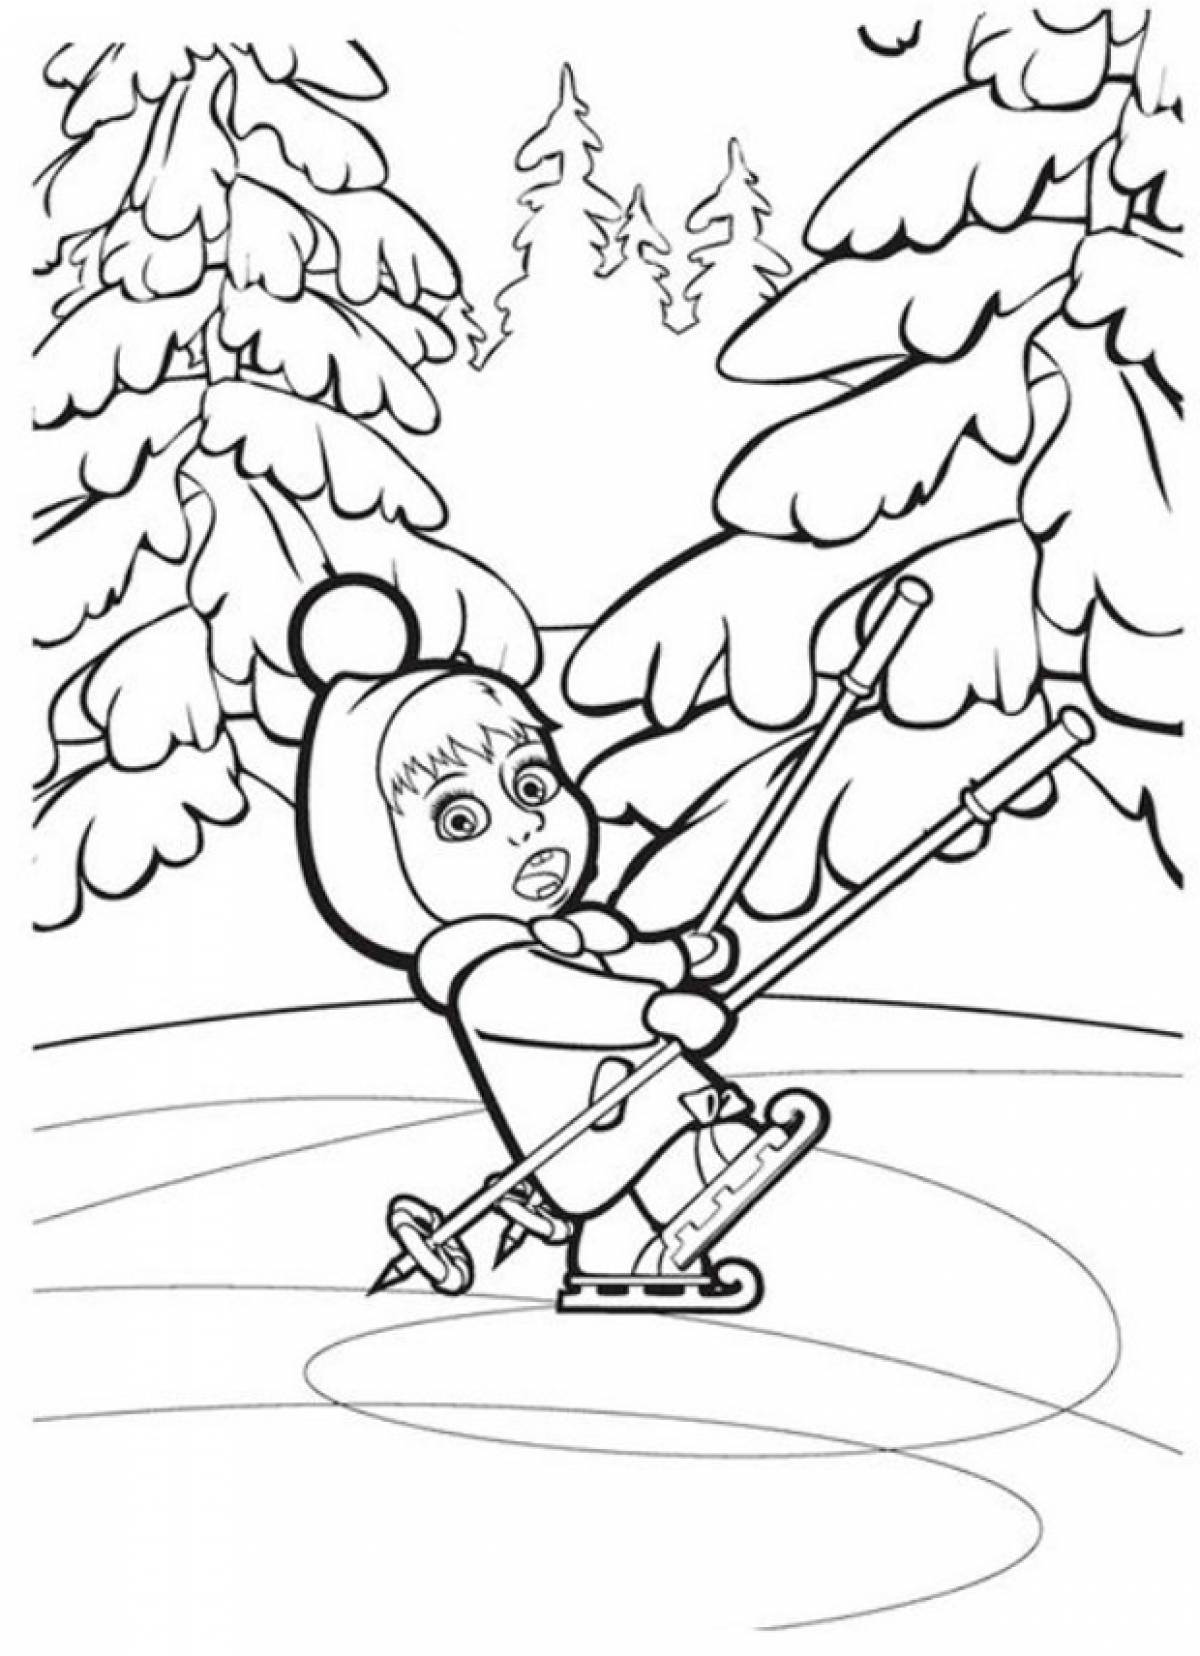 Masha and ski poles coloring page